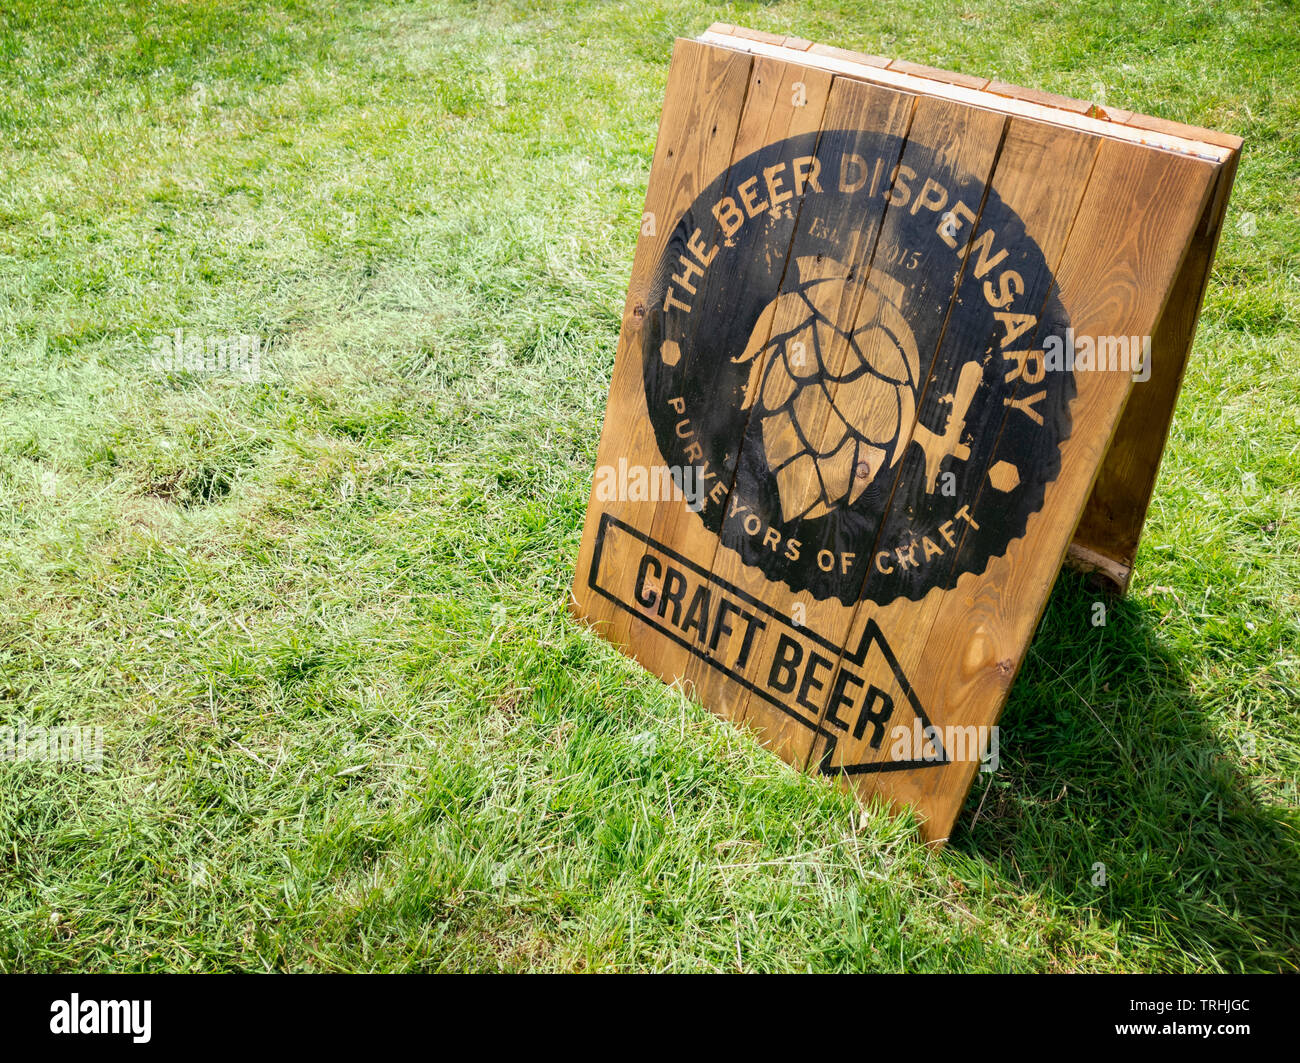 Craft Beer Sign / Signage, The Beer Dispensary. Wooden Craft Beer / Ale / IPA sign on grass background, Edenbridge Food & Drink Festival, Kent, UK Stock Photo